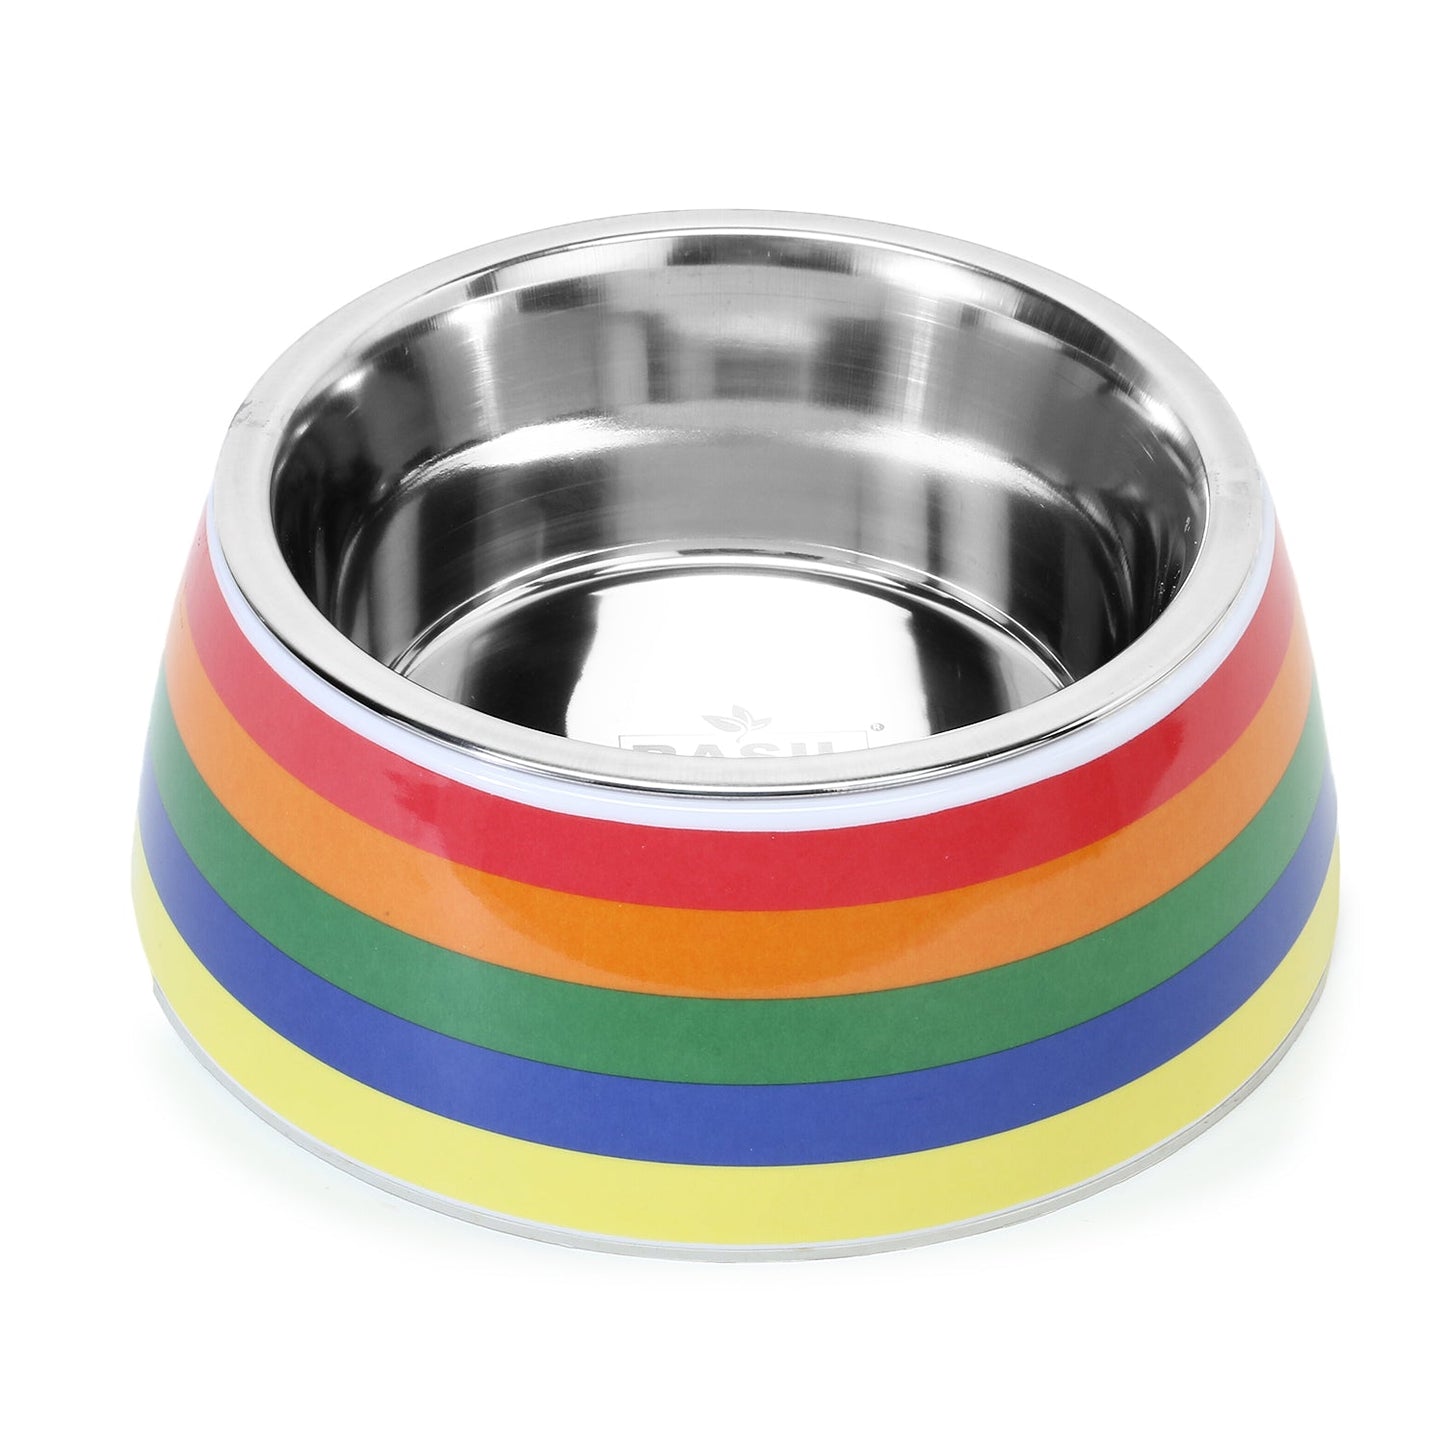 Basil Rainbow Pet Feeding Bowl, Stainless Steel & Melamine